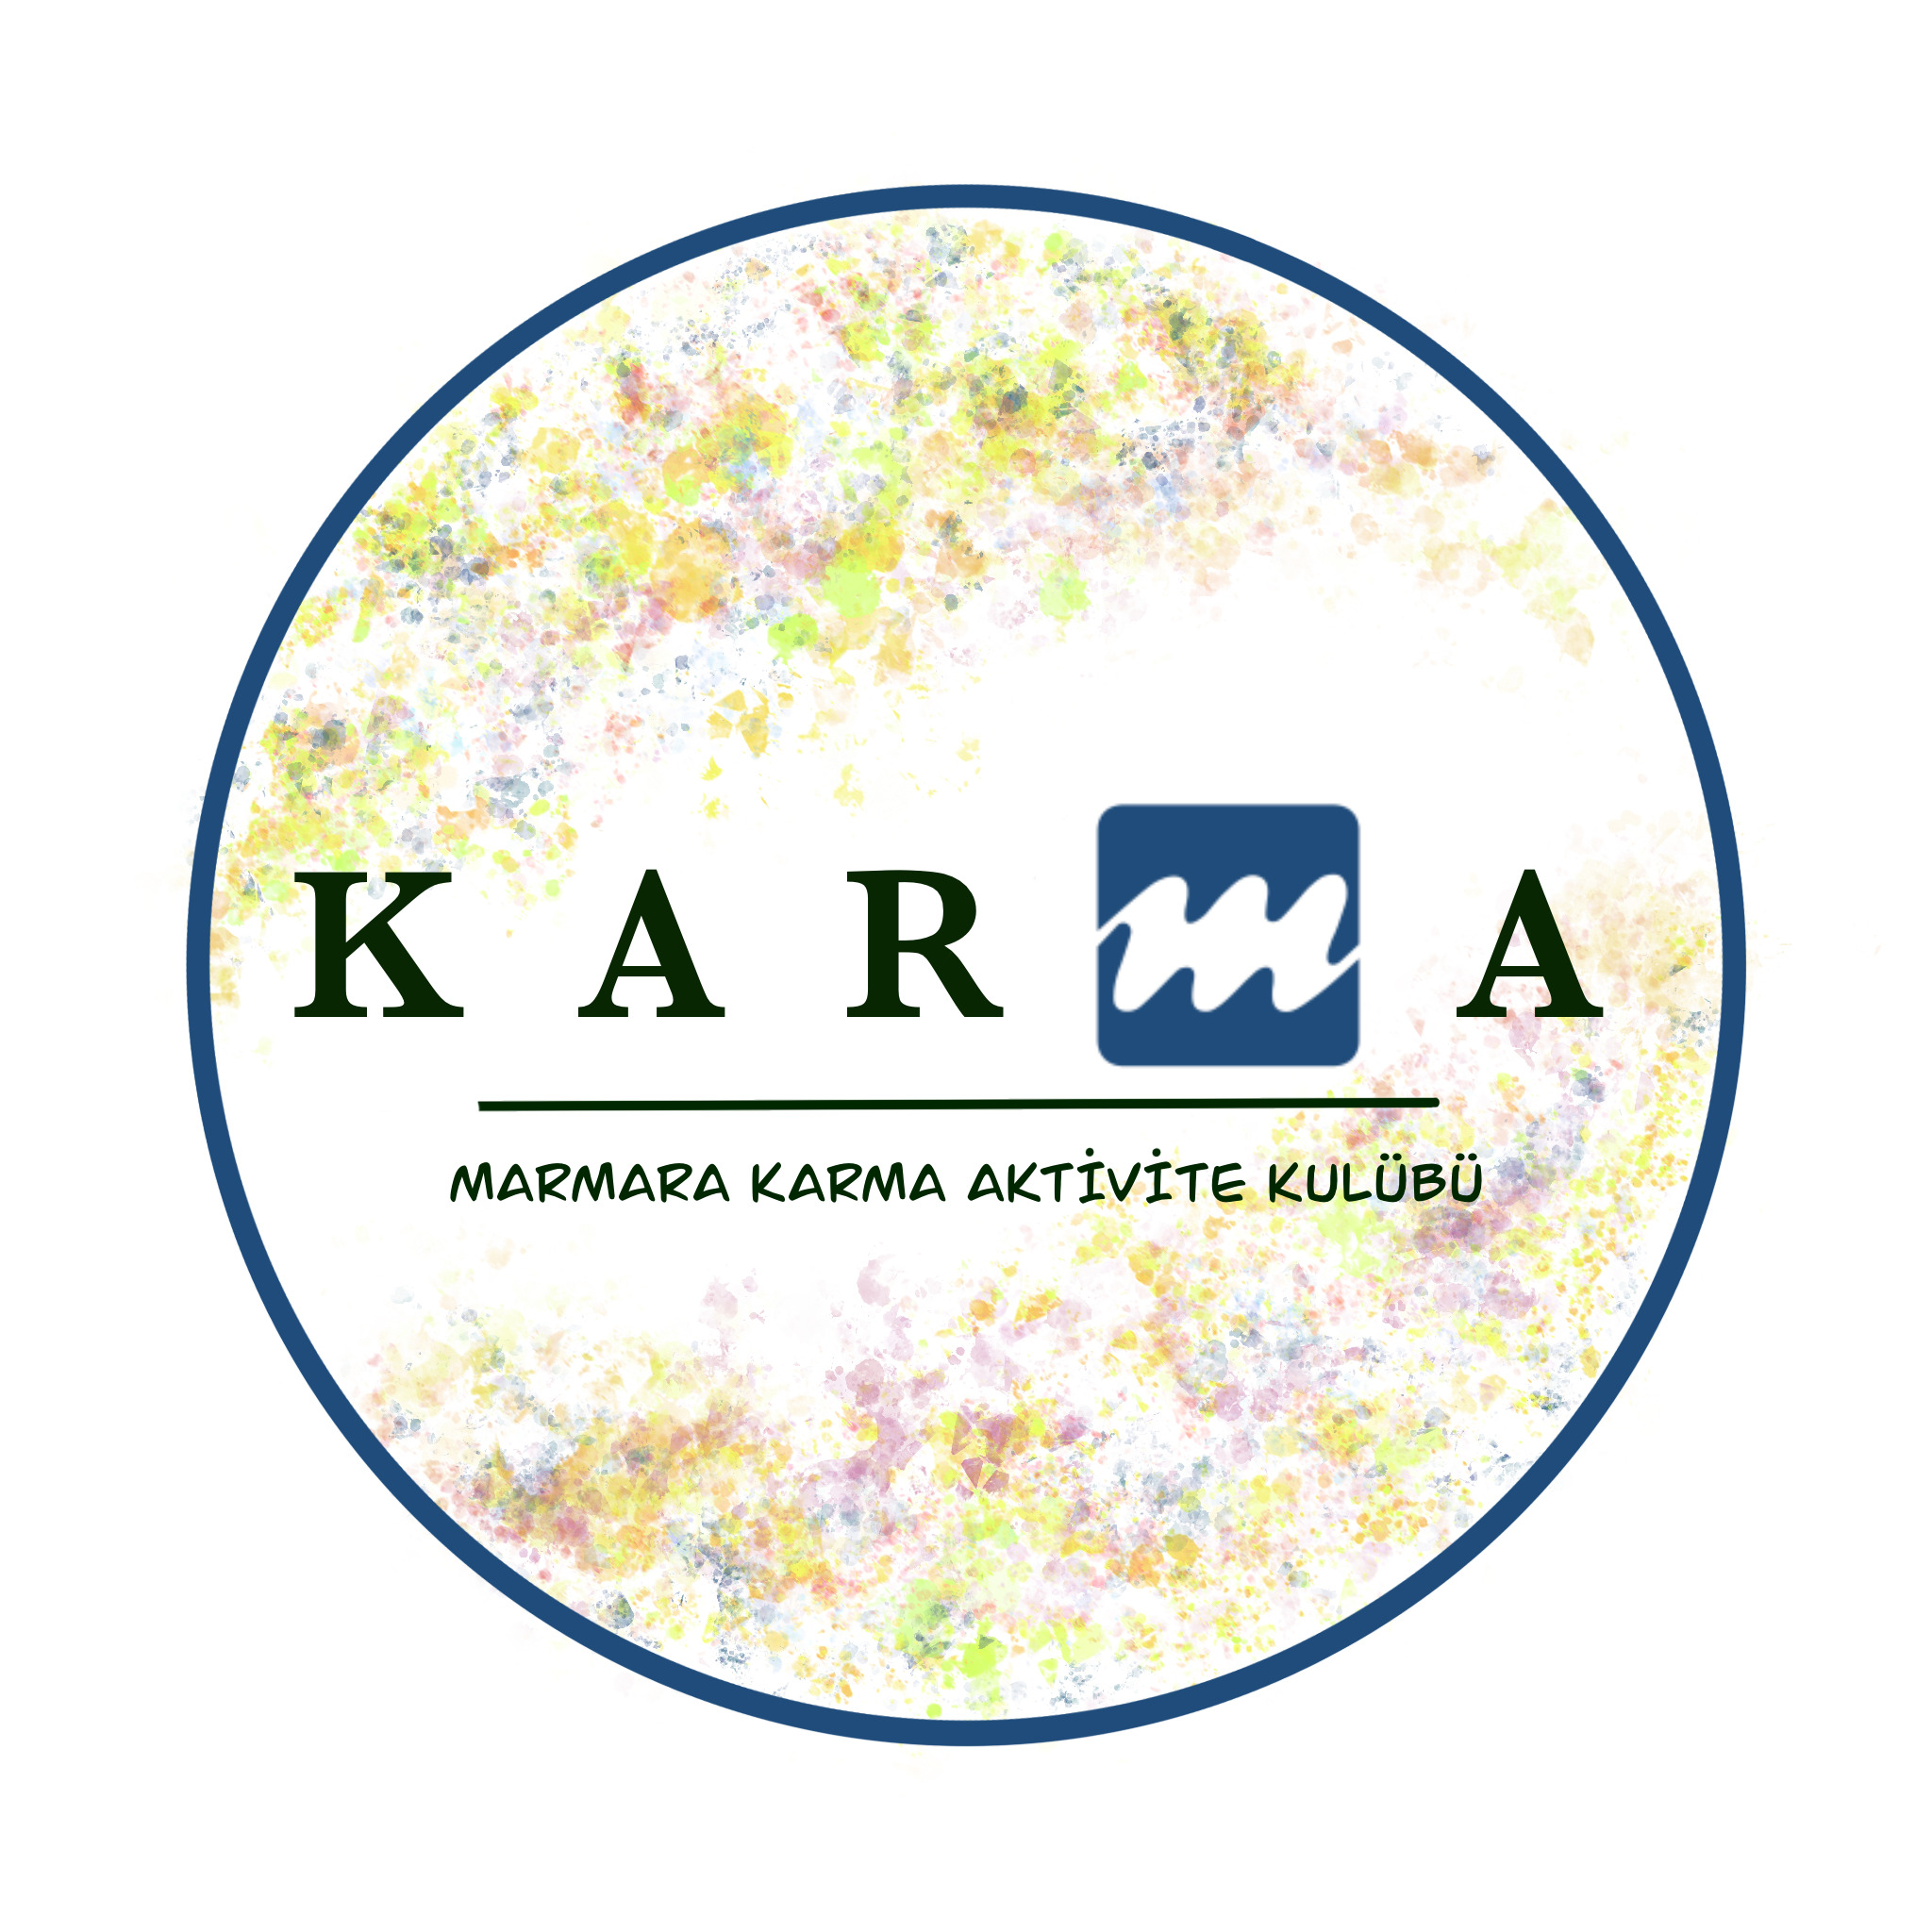 Marmara Karma Aktivite Kulübü